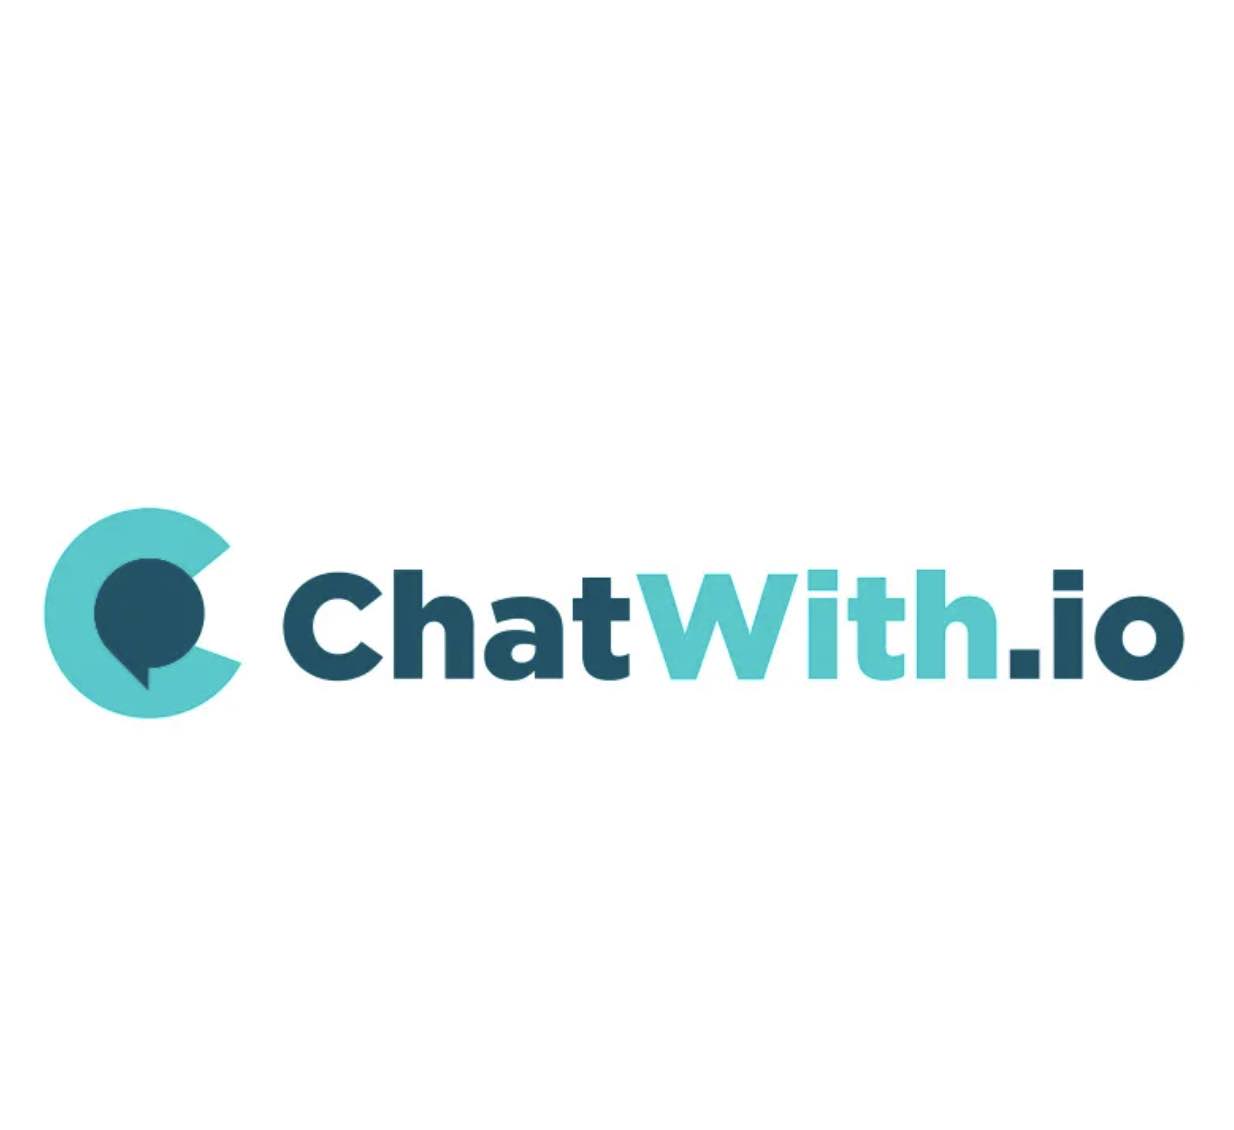 ChatWith.io